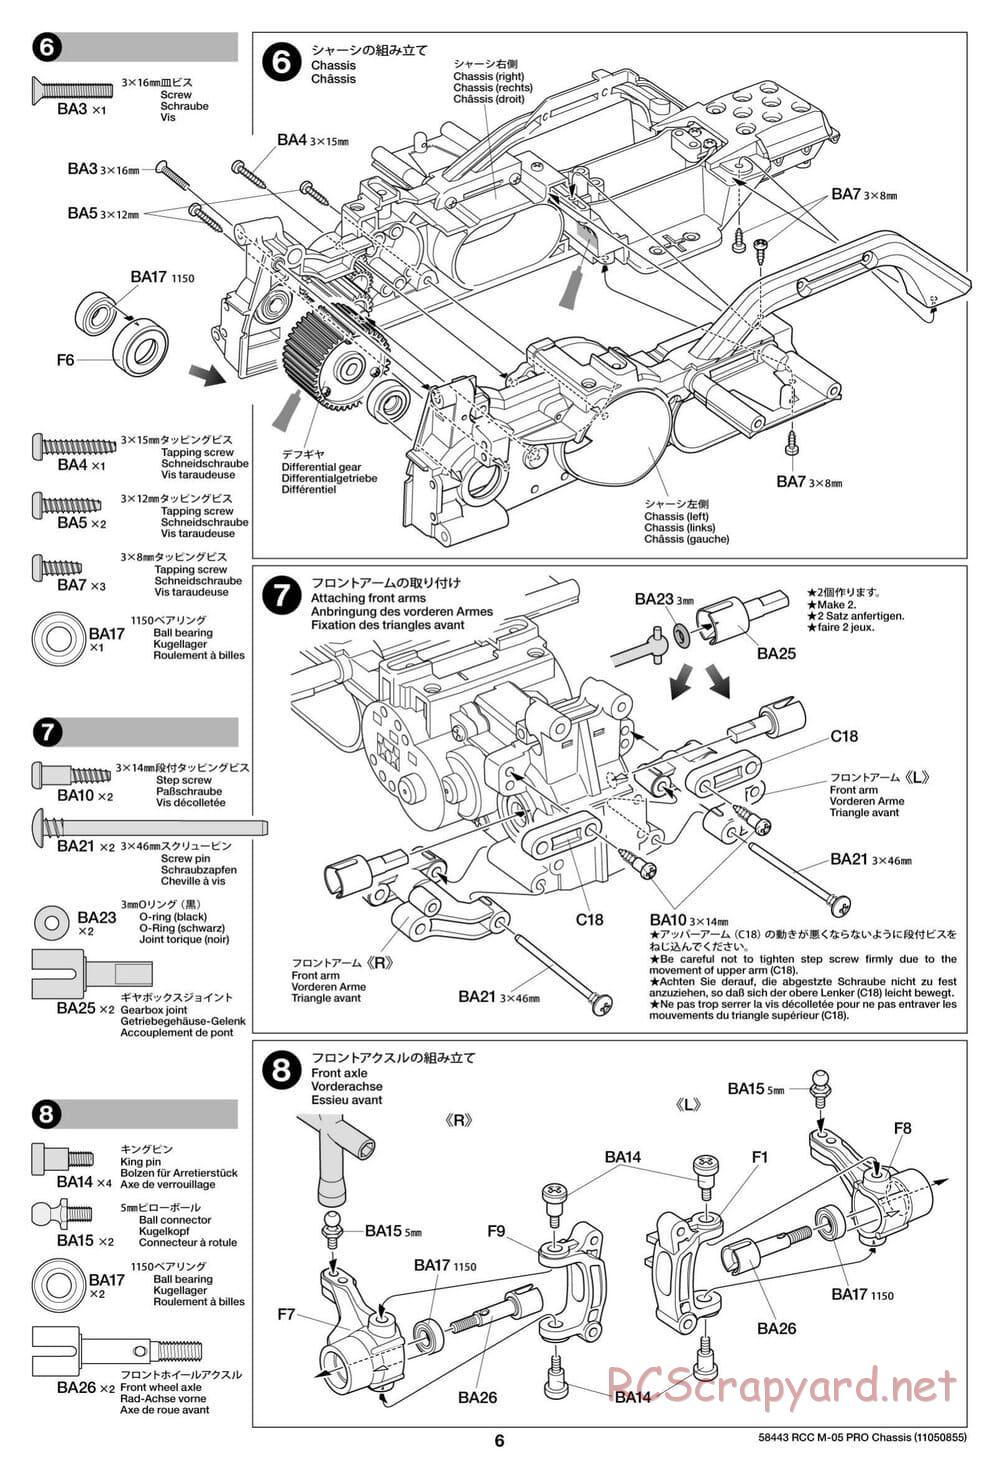 Tamiya - M05-Pro Chassis - Manual - Page 6